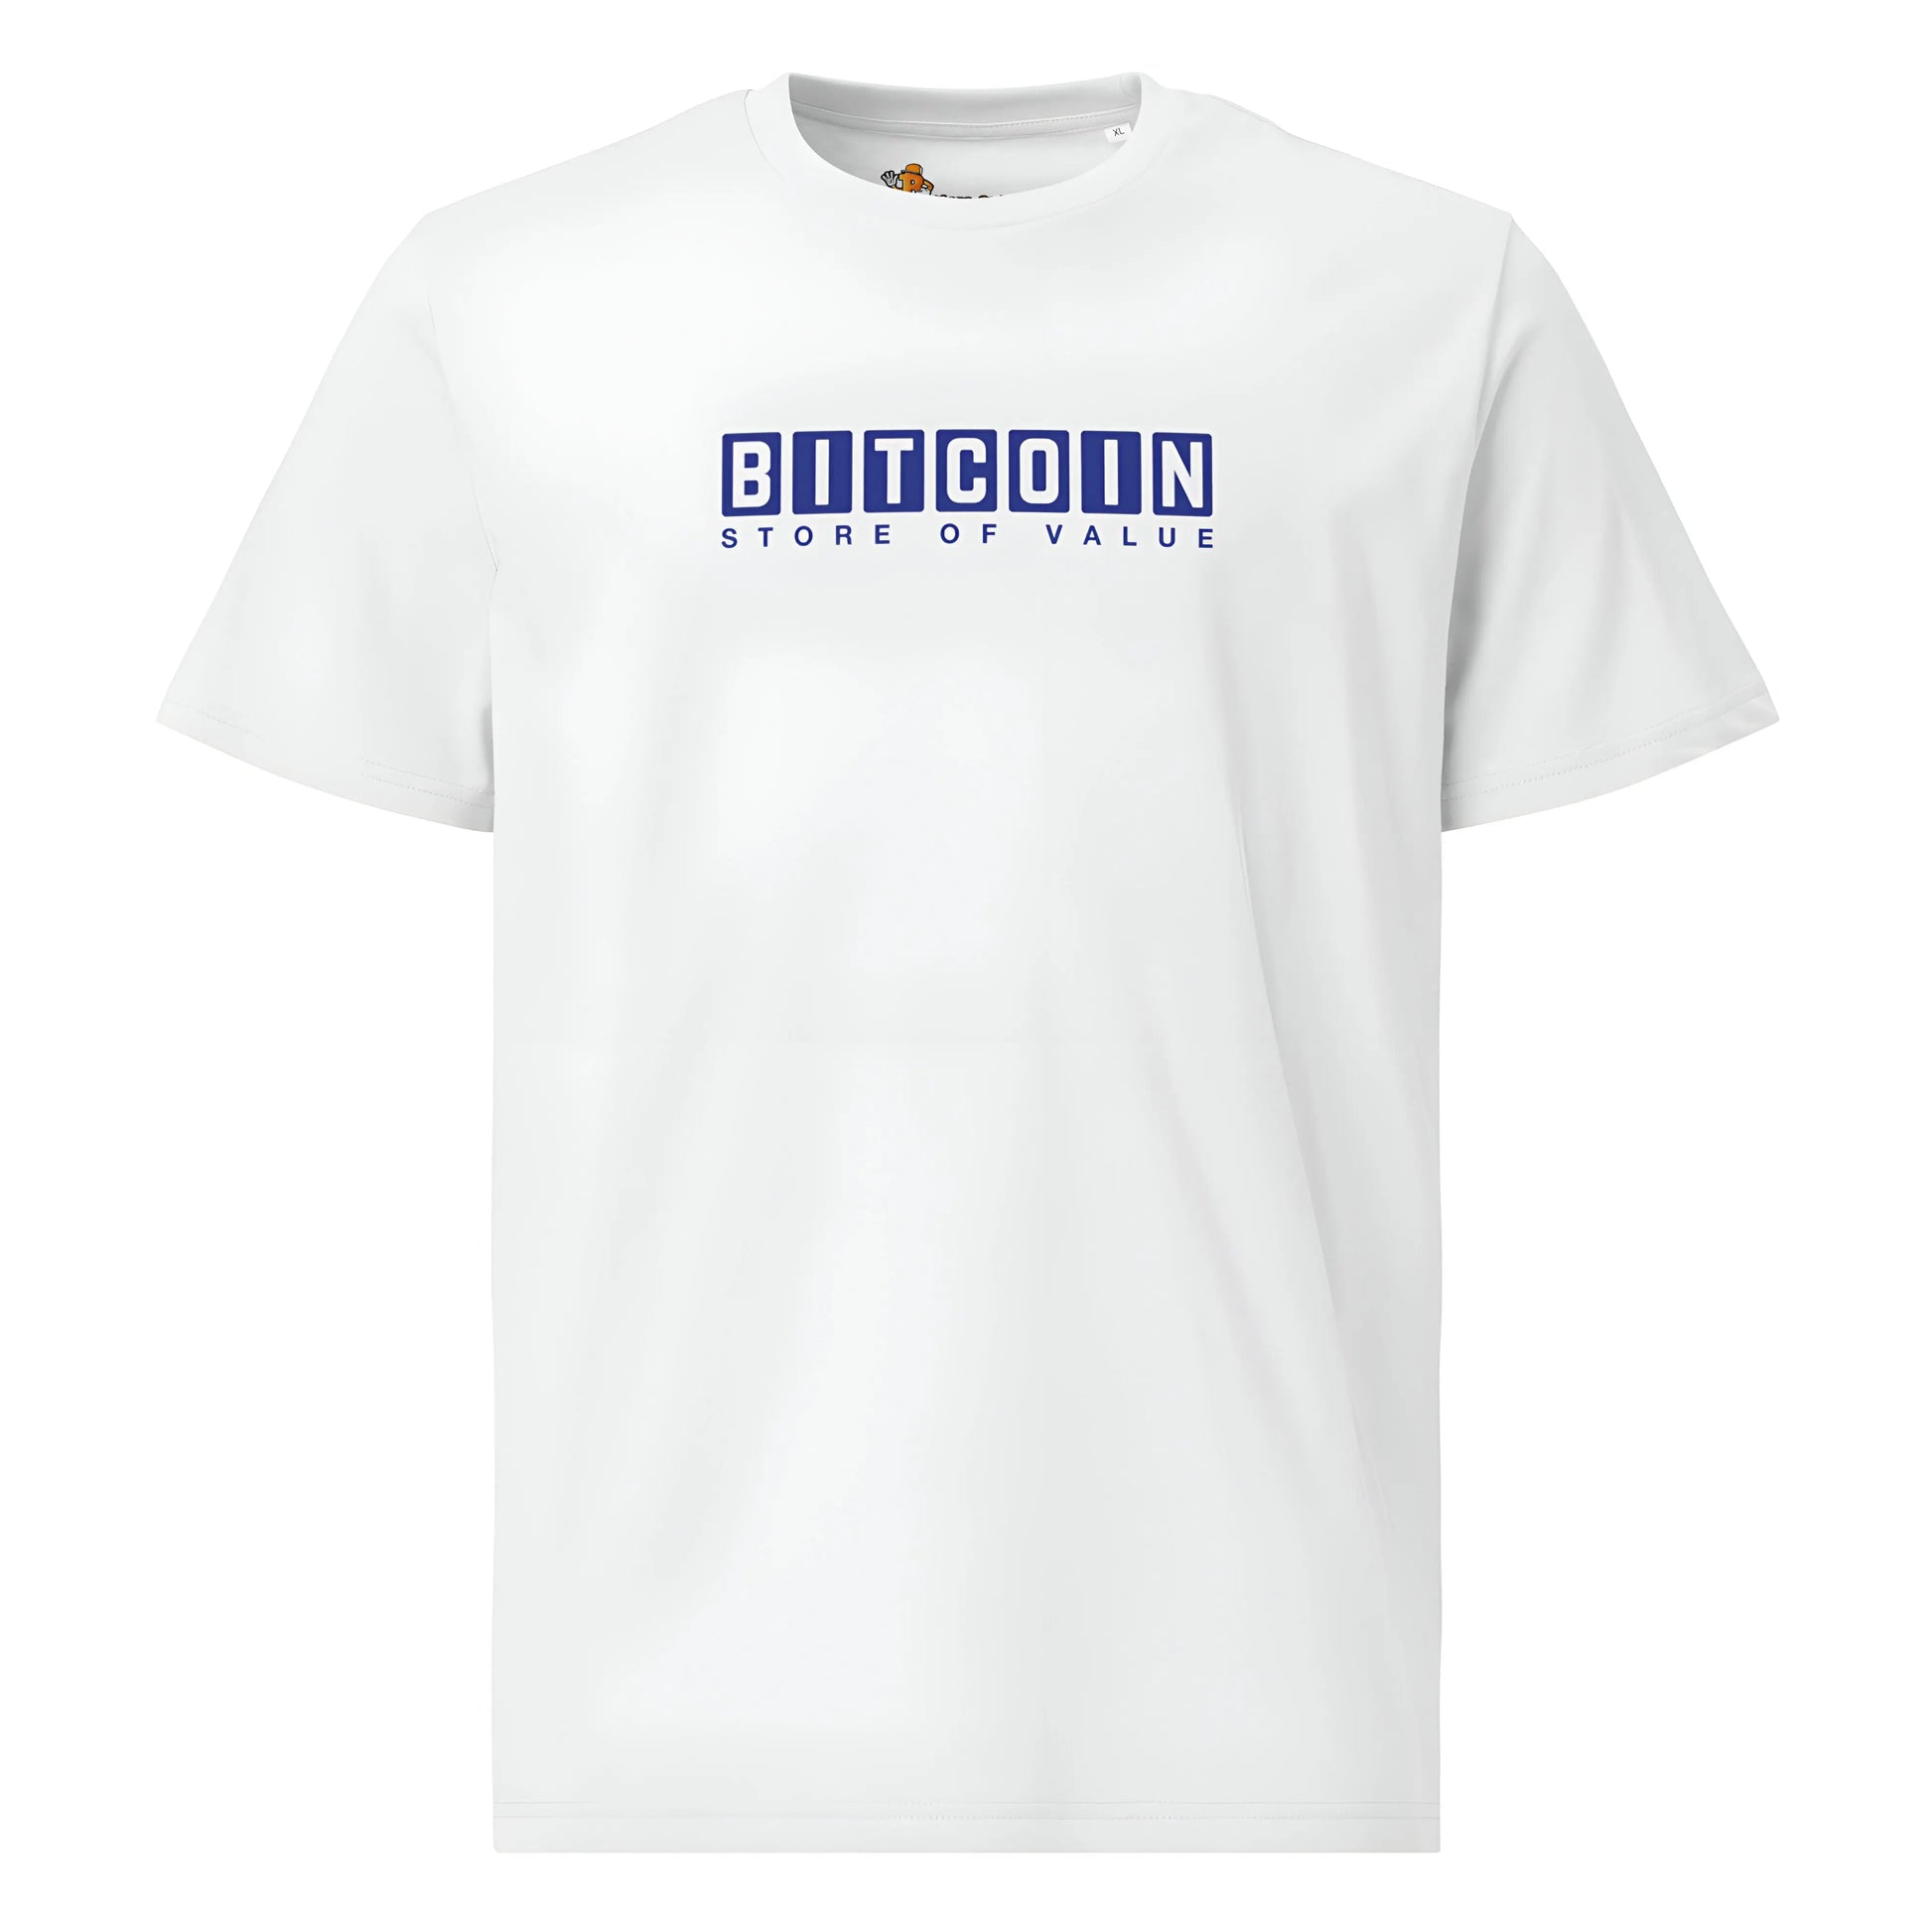 Bitcoin - Store of Value - Premium Unisex Organic Cotton Bitcoin T-shirt White